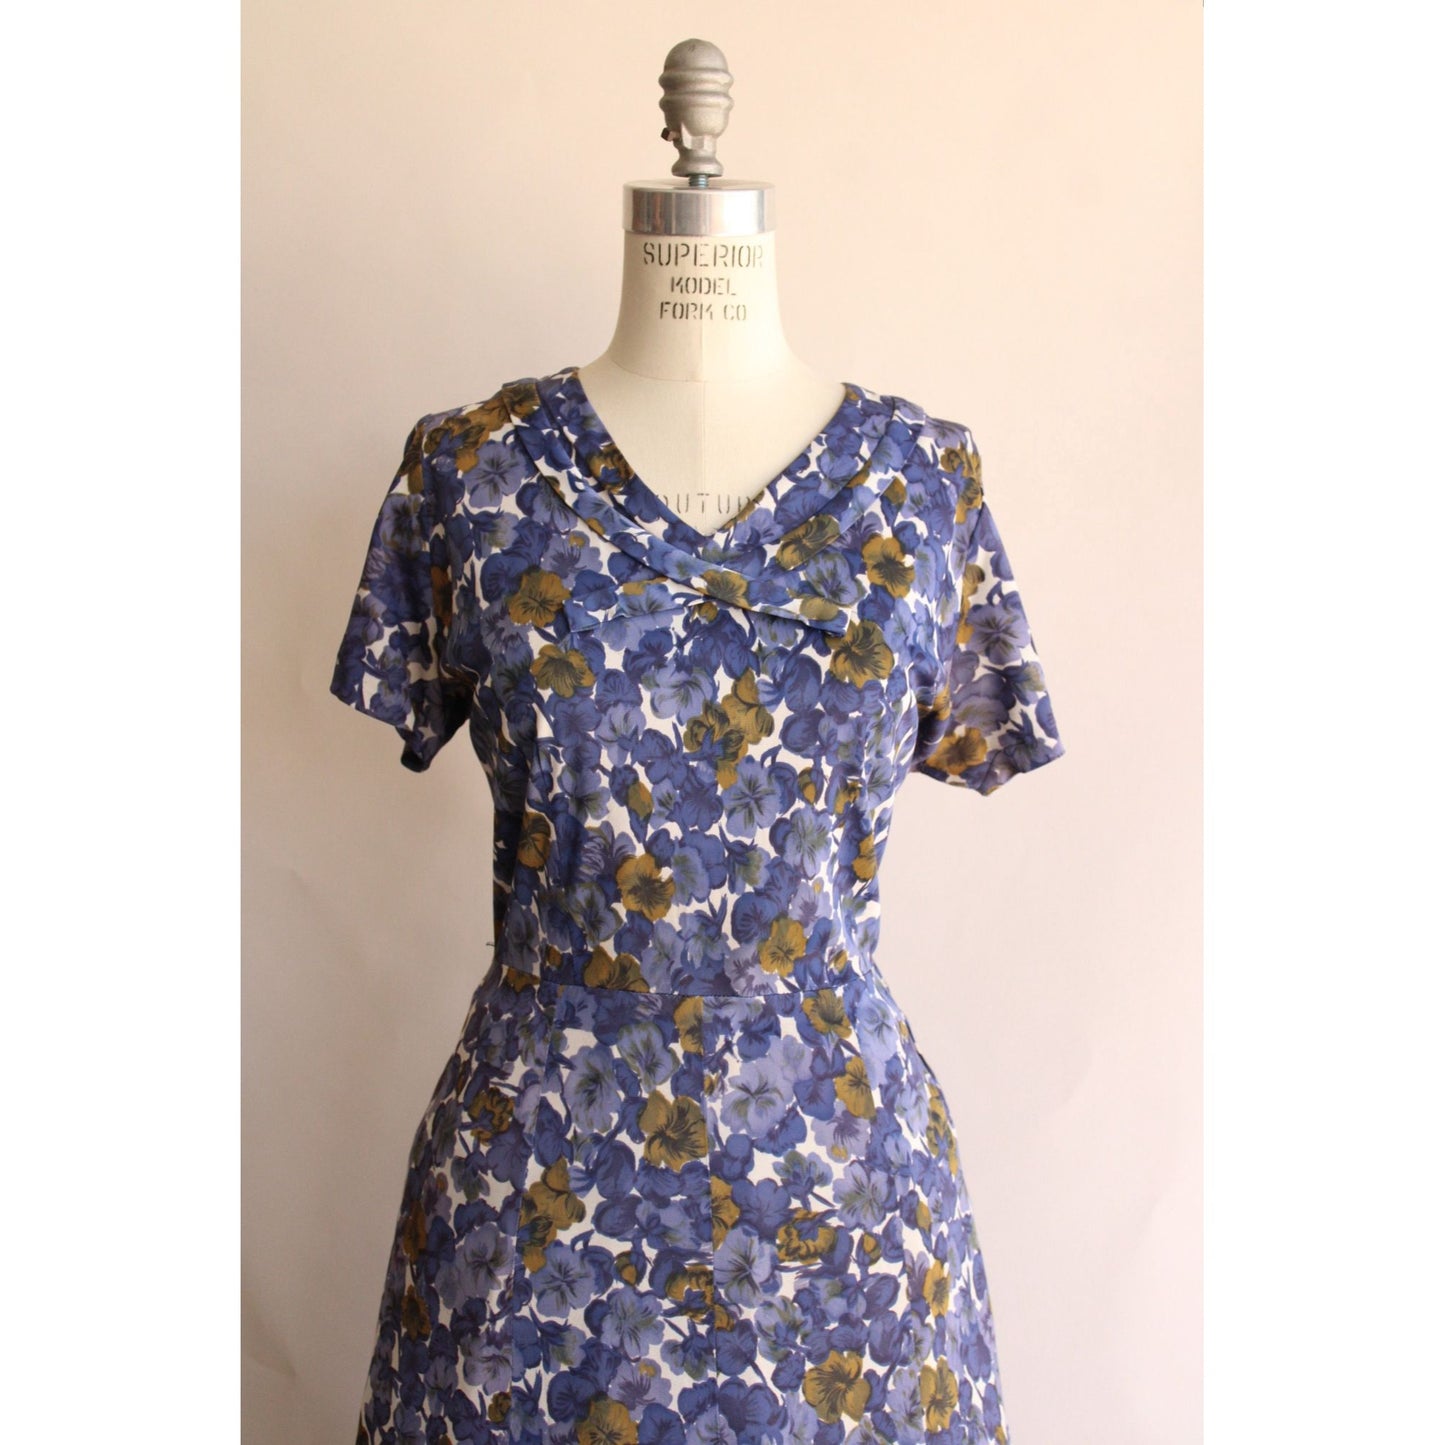 Vintage 1940s 1950s Blue and Brown Floral Print Dress